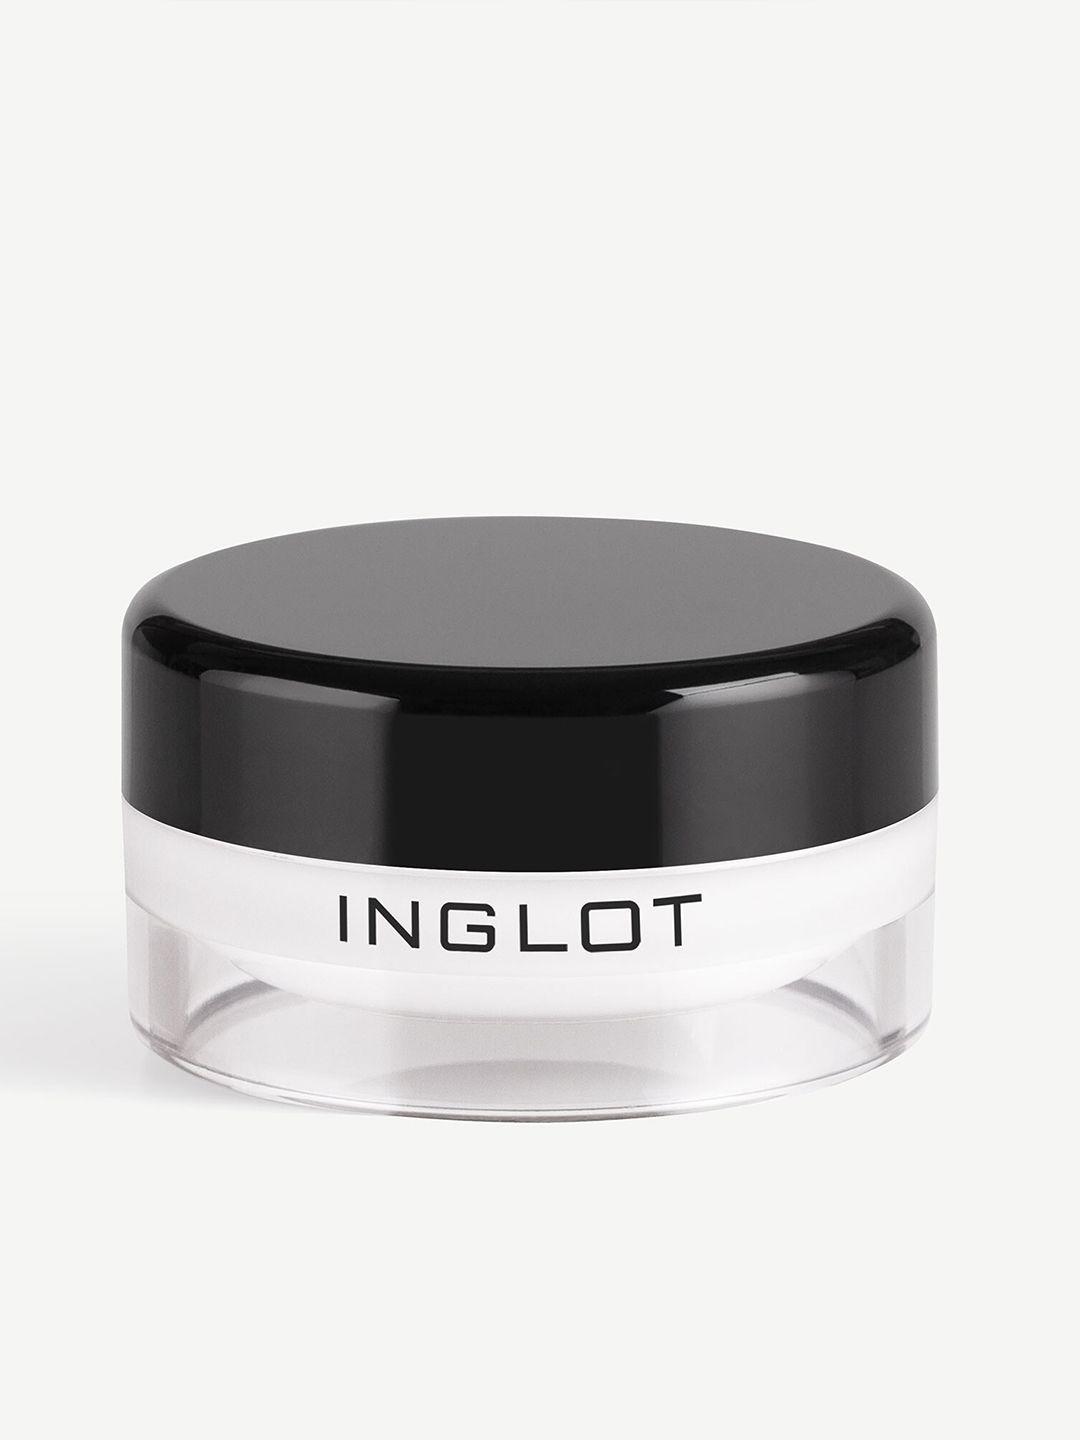 inglot amc waterproof & matte gel eyeliner 5.5g - shade 76